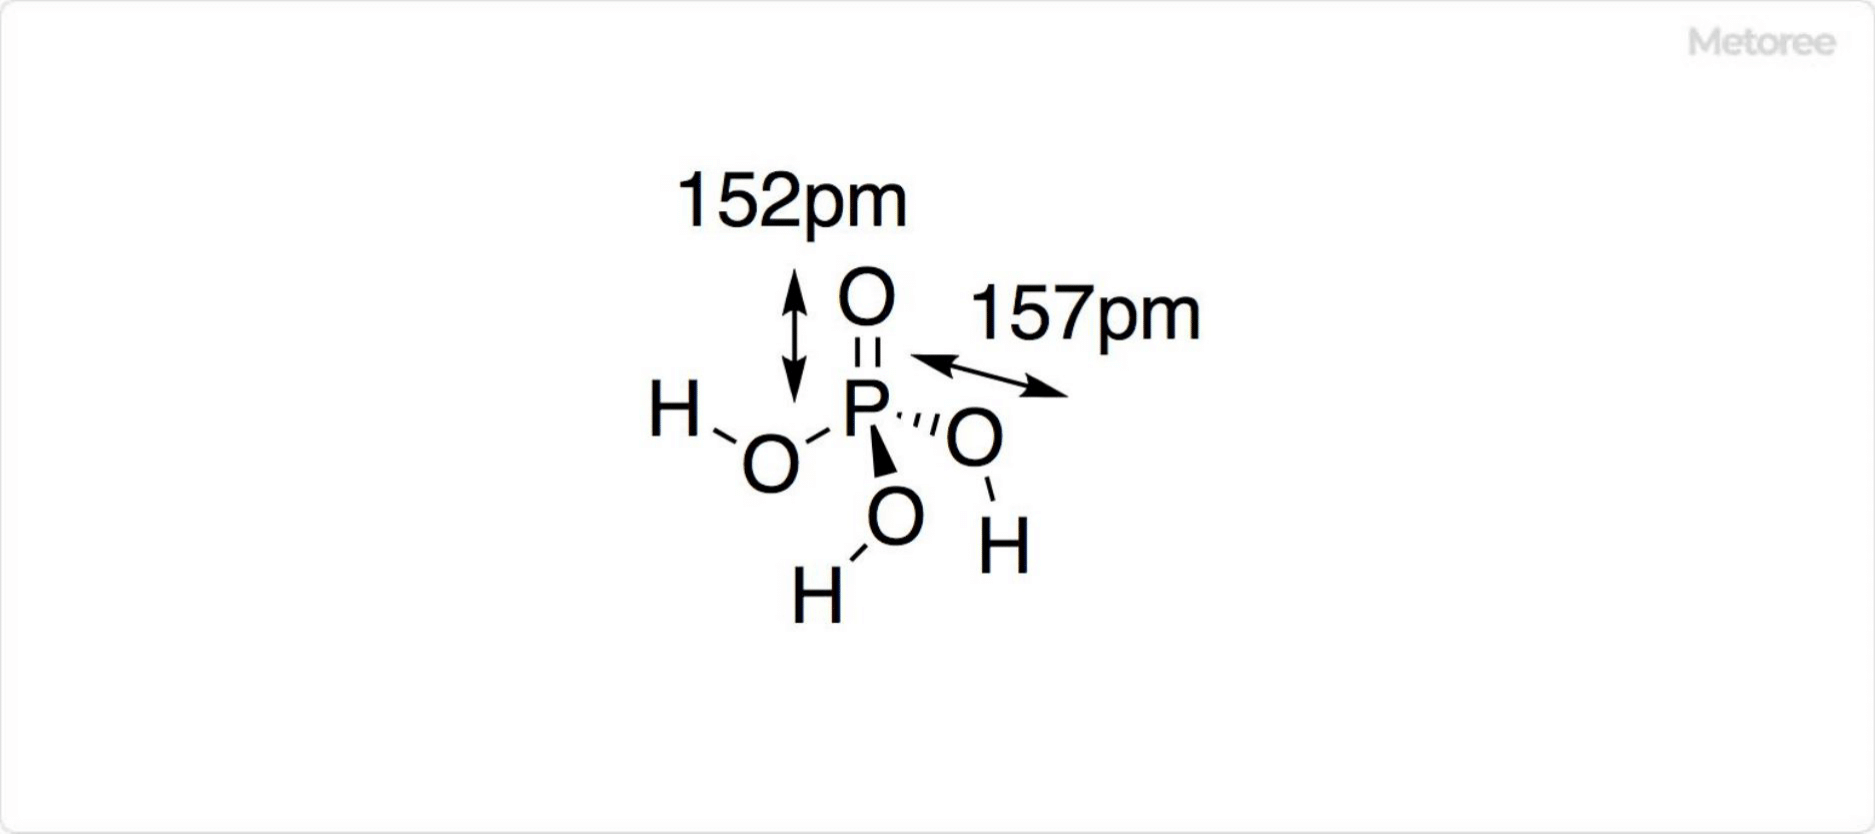 Figure 1. Structure of phosphoric acid